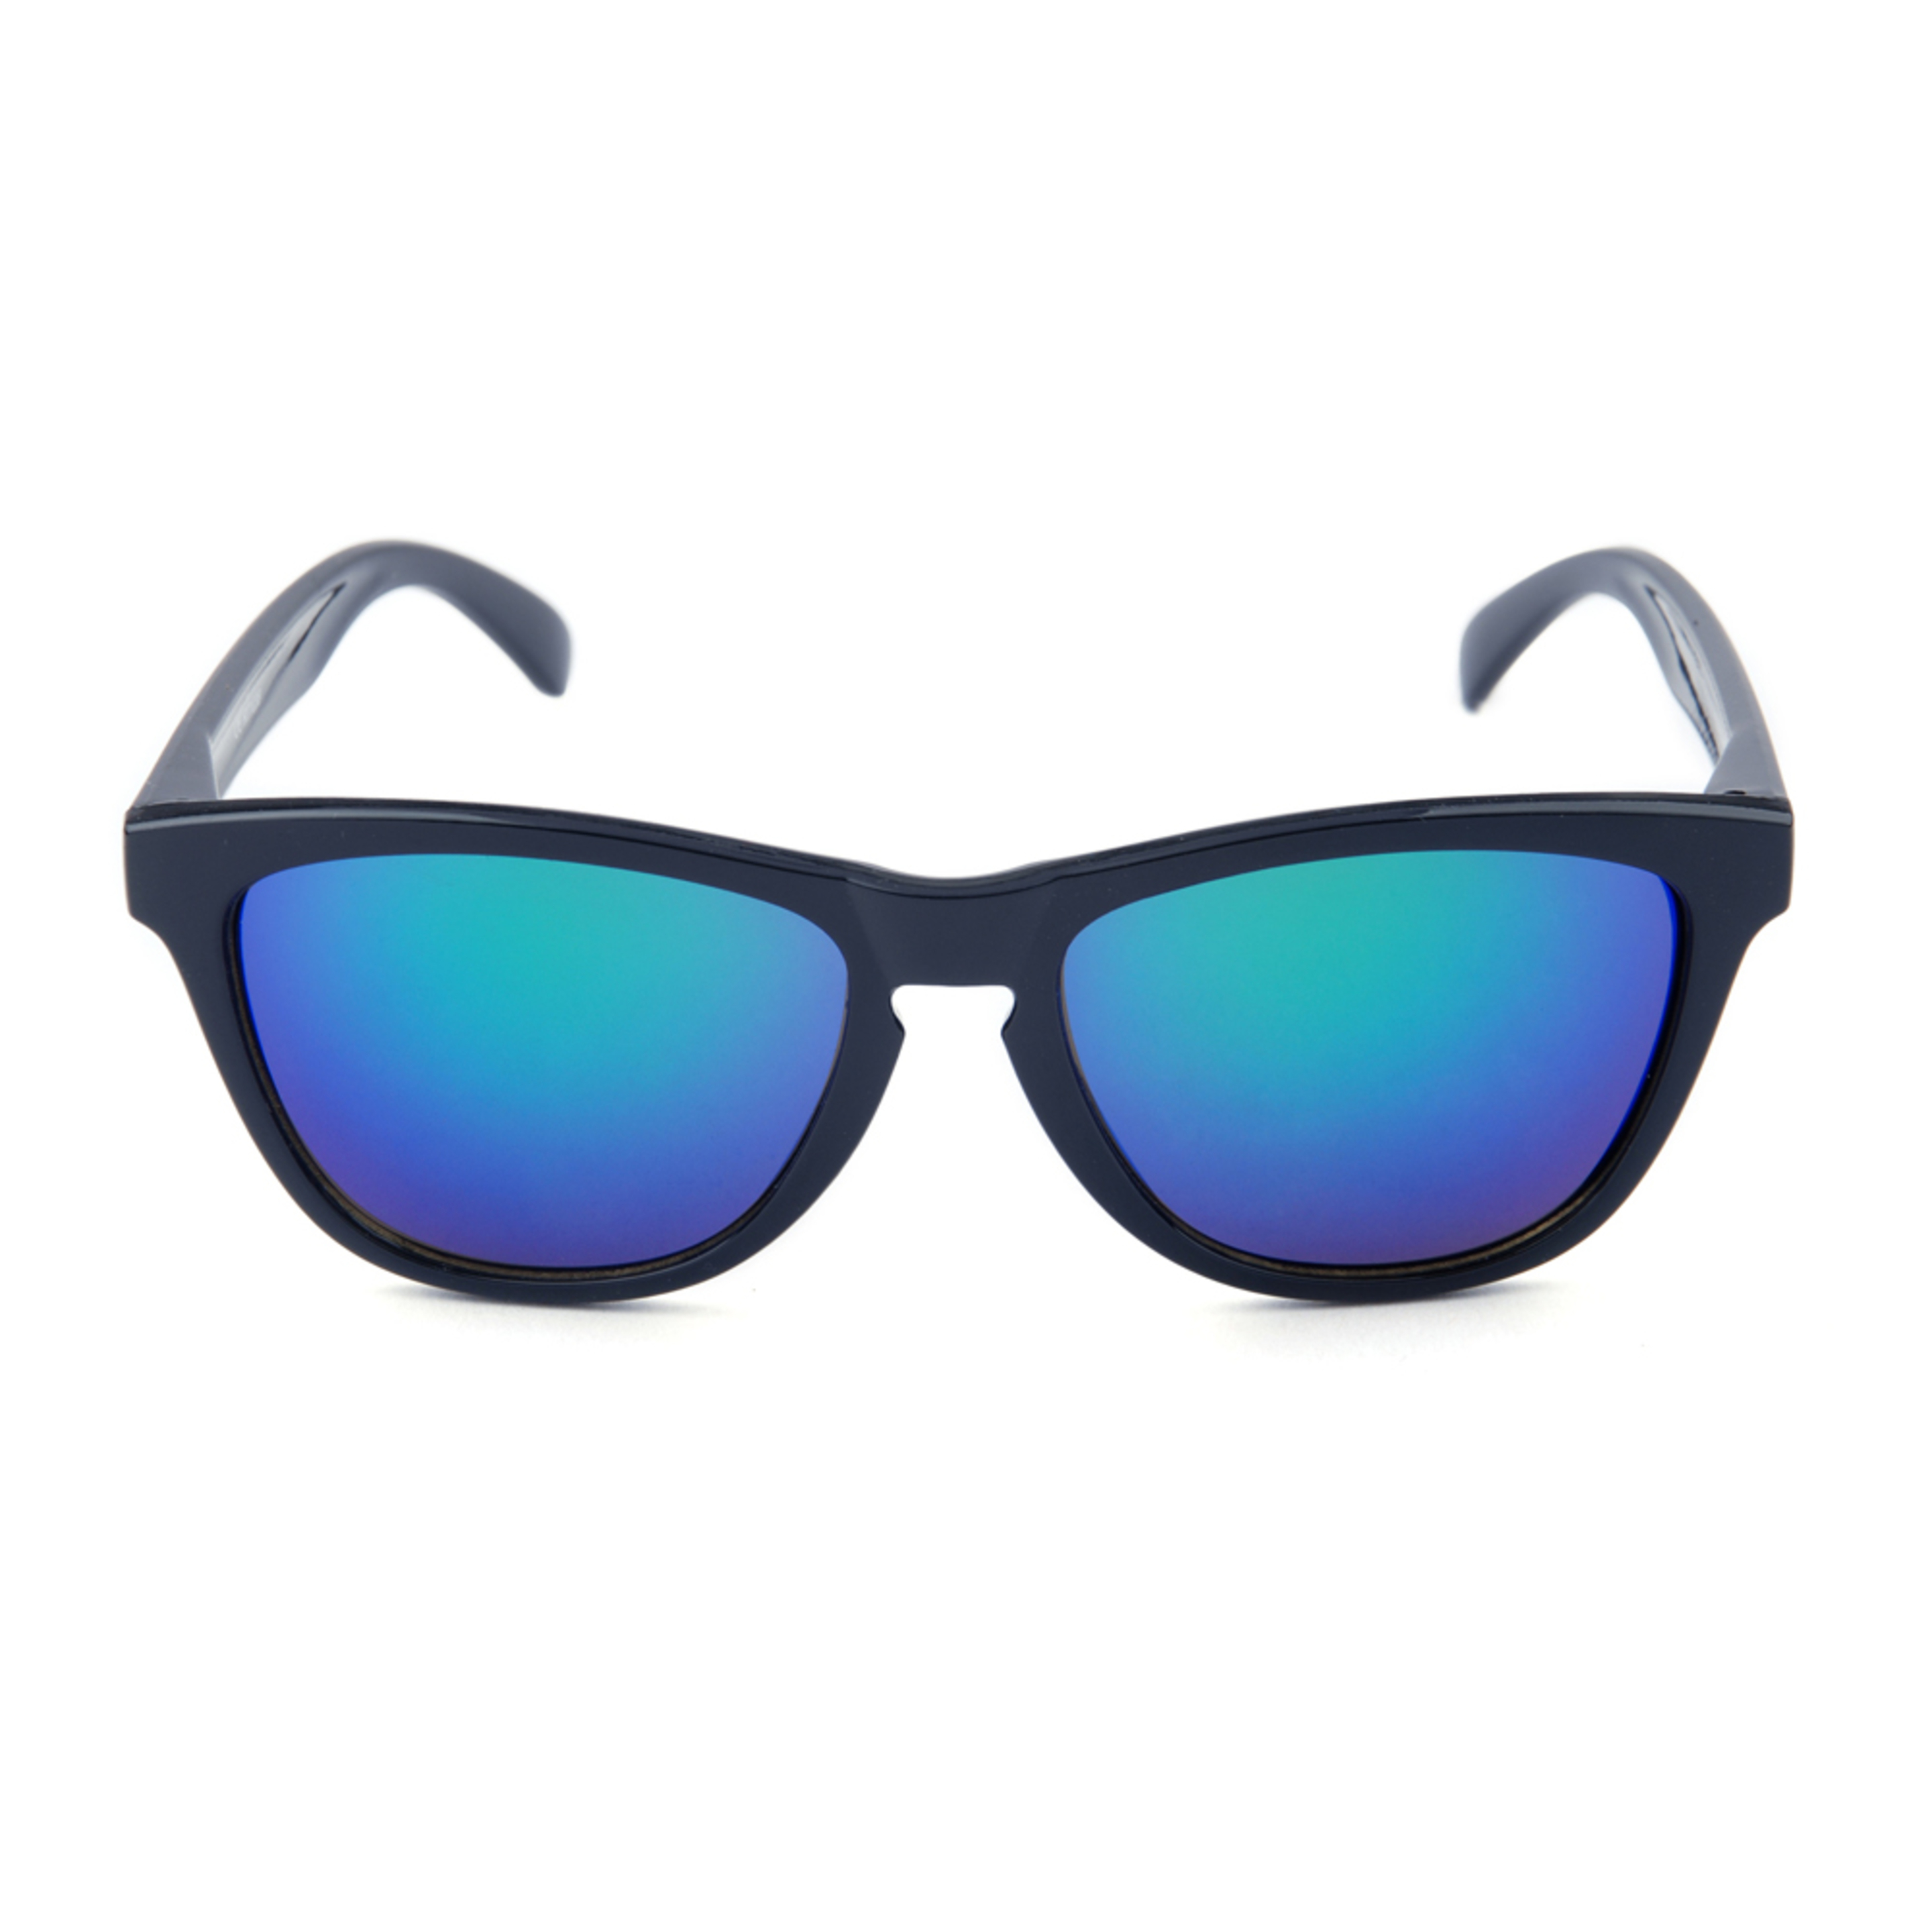 Gafas De Sol Sexton Original - Azul Oscuro - Cuadrada  MKP